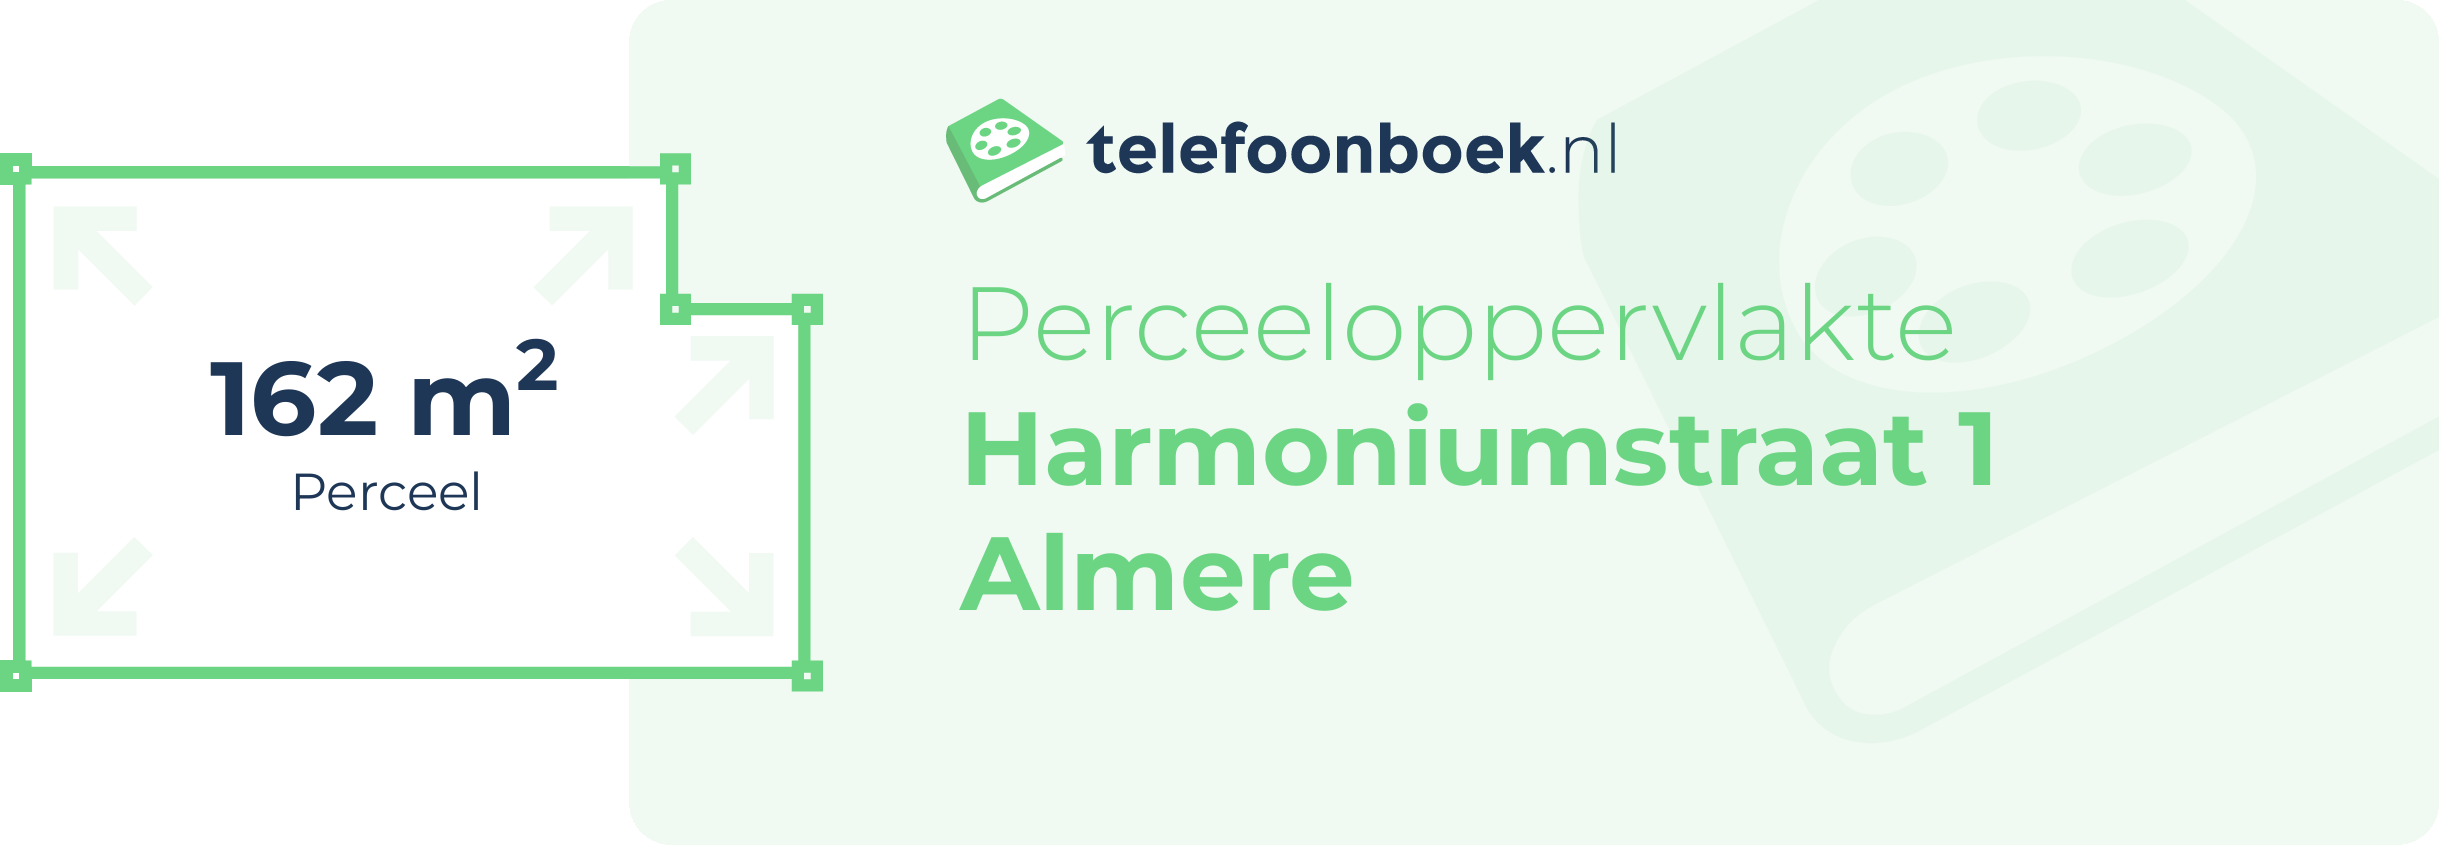 Perceeloppervlakte Harmoniumstraat 1 Almere